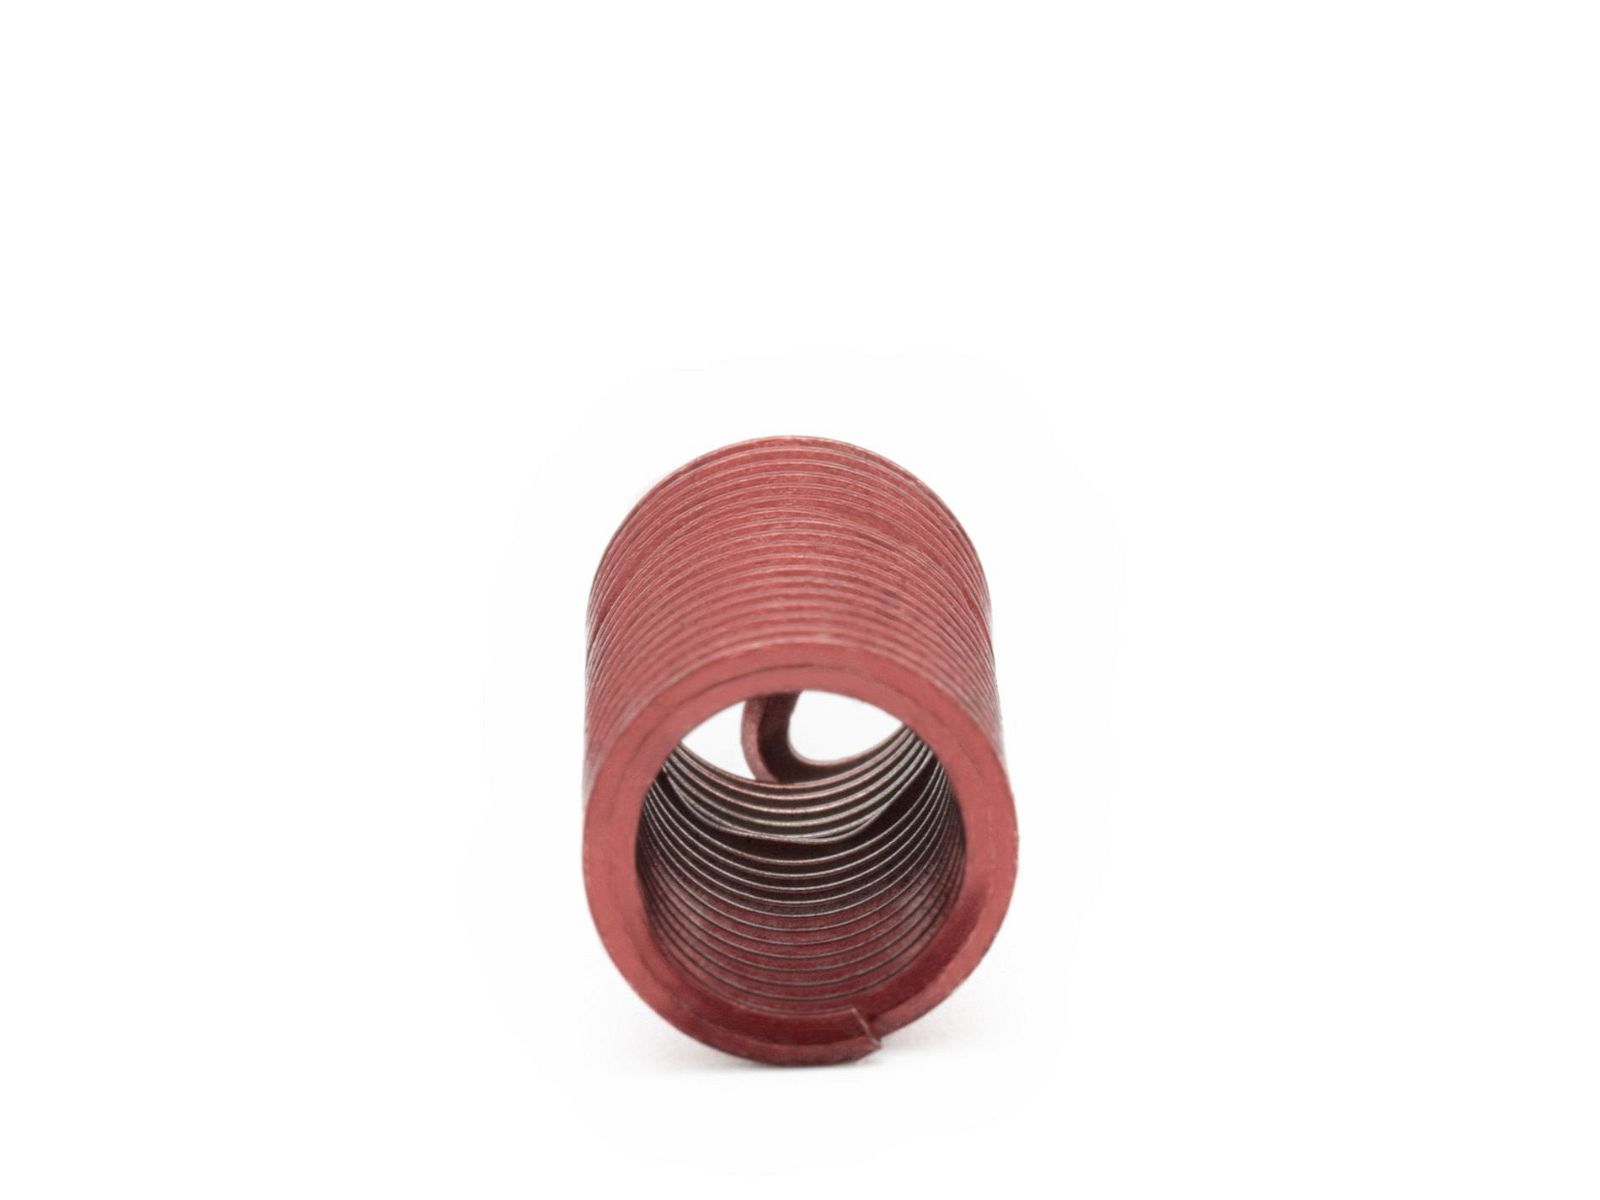 BaerCoil Drahtgewindeeinsätze M 2,2 x 0,45 - 3,0 D (6,6 mm) - screw grip (schraubensichernd) - 100 Stk.